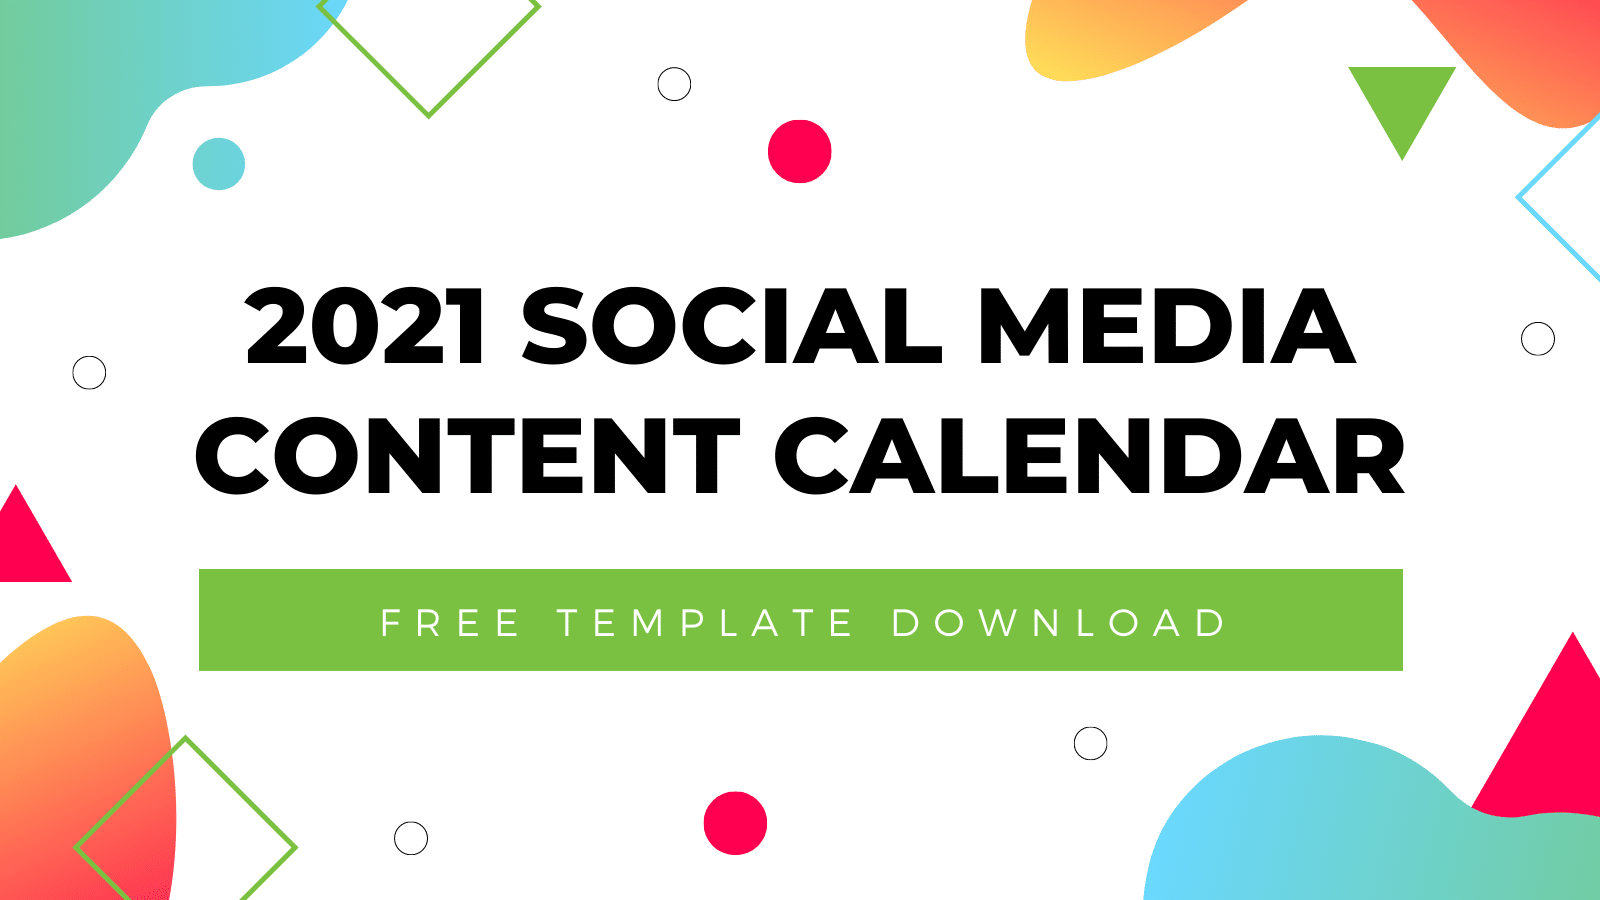 Free Marketing Calendar Template 2022 2022 Social Media Content Calendar Template | Free Download